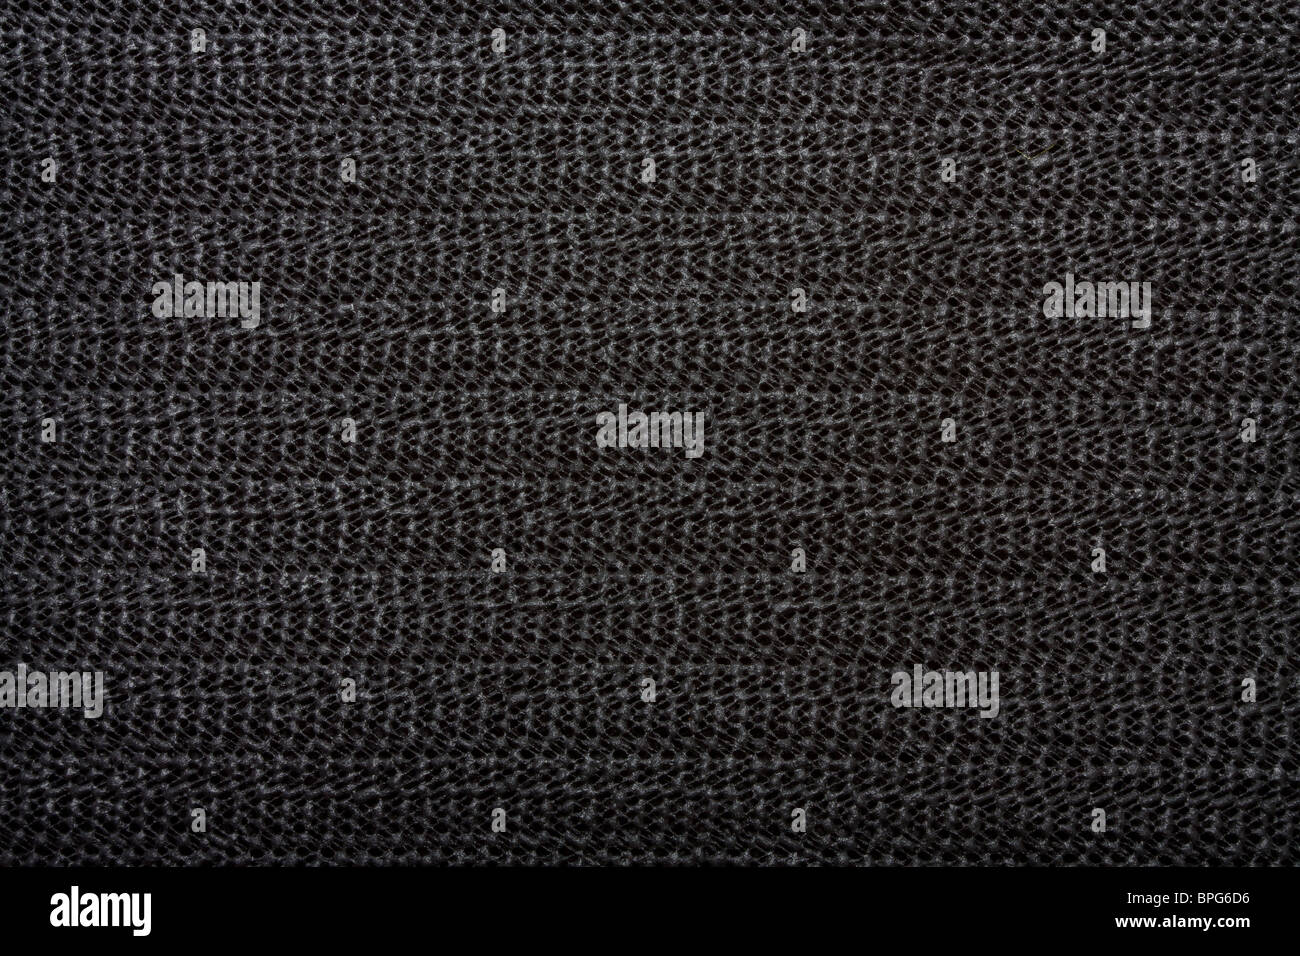 Black non slip Silicon or rubber mat background or texture. Stock Photo